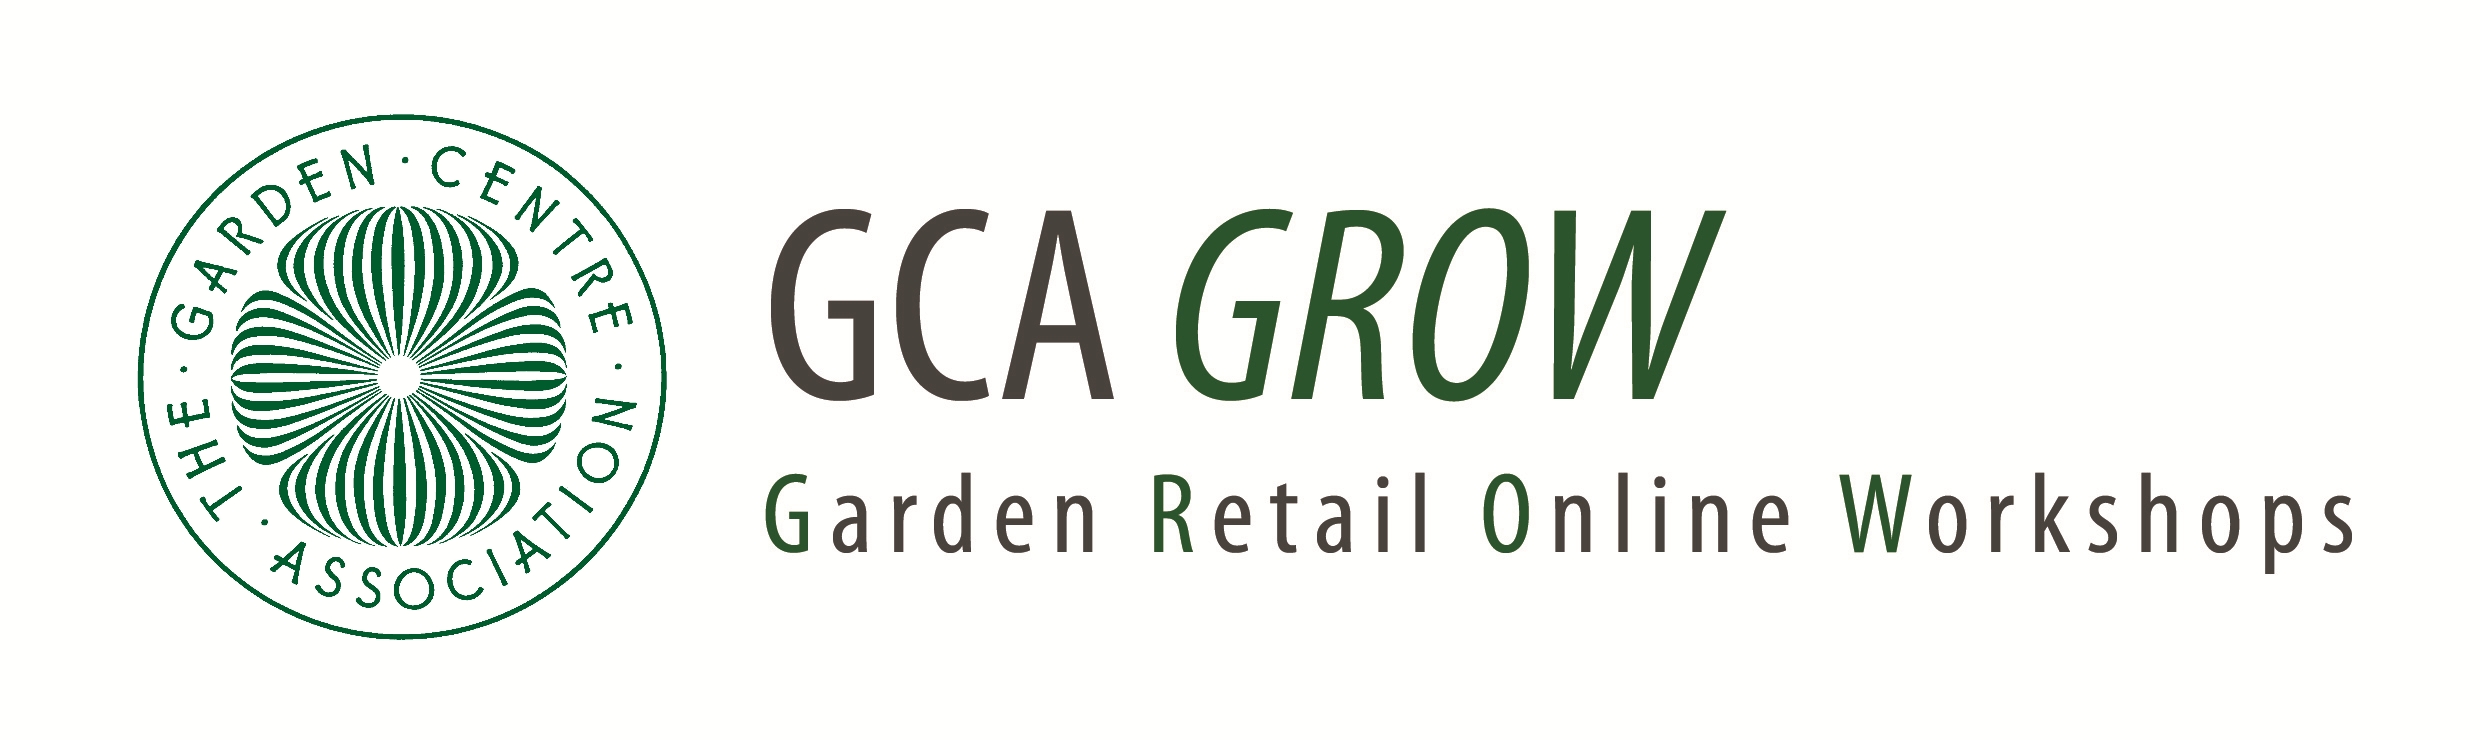 GCA GROW Logo